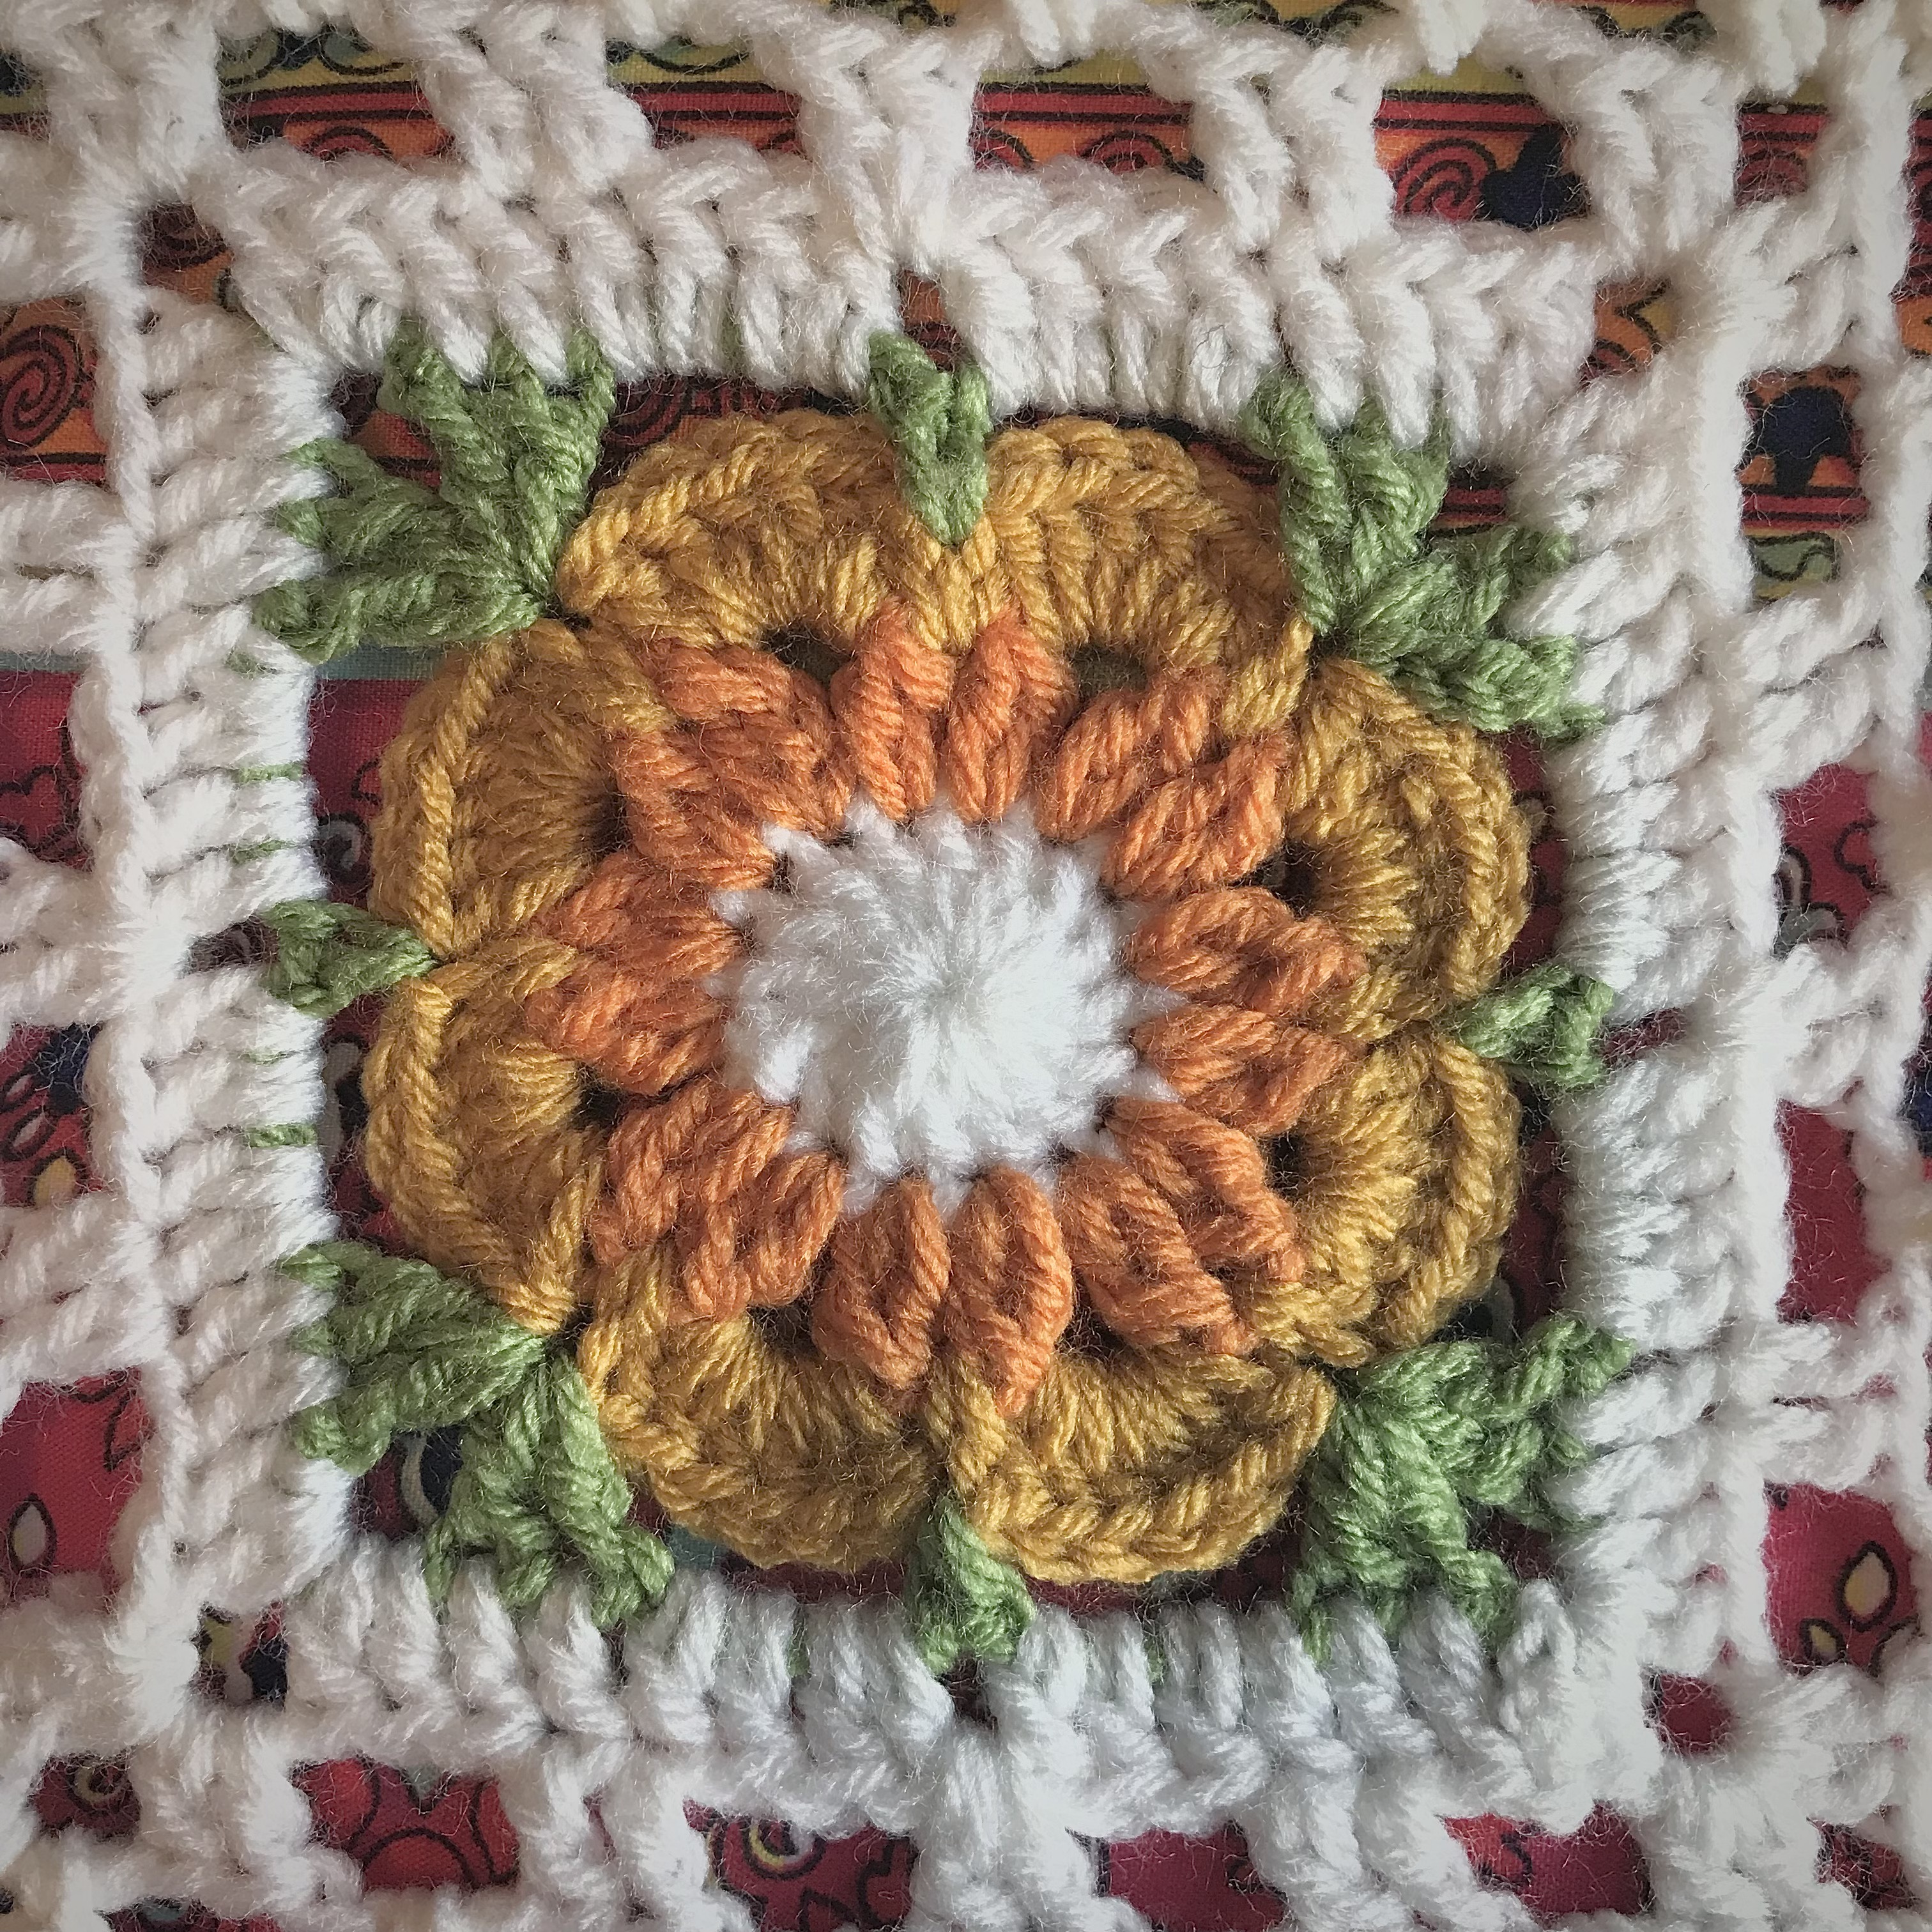 My Secret Garden Afghan Crochet Blanket Pattern – CAL Part 1